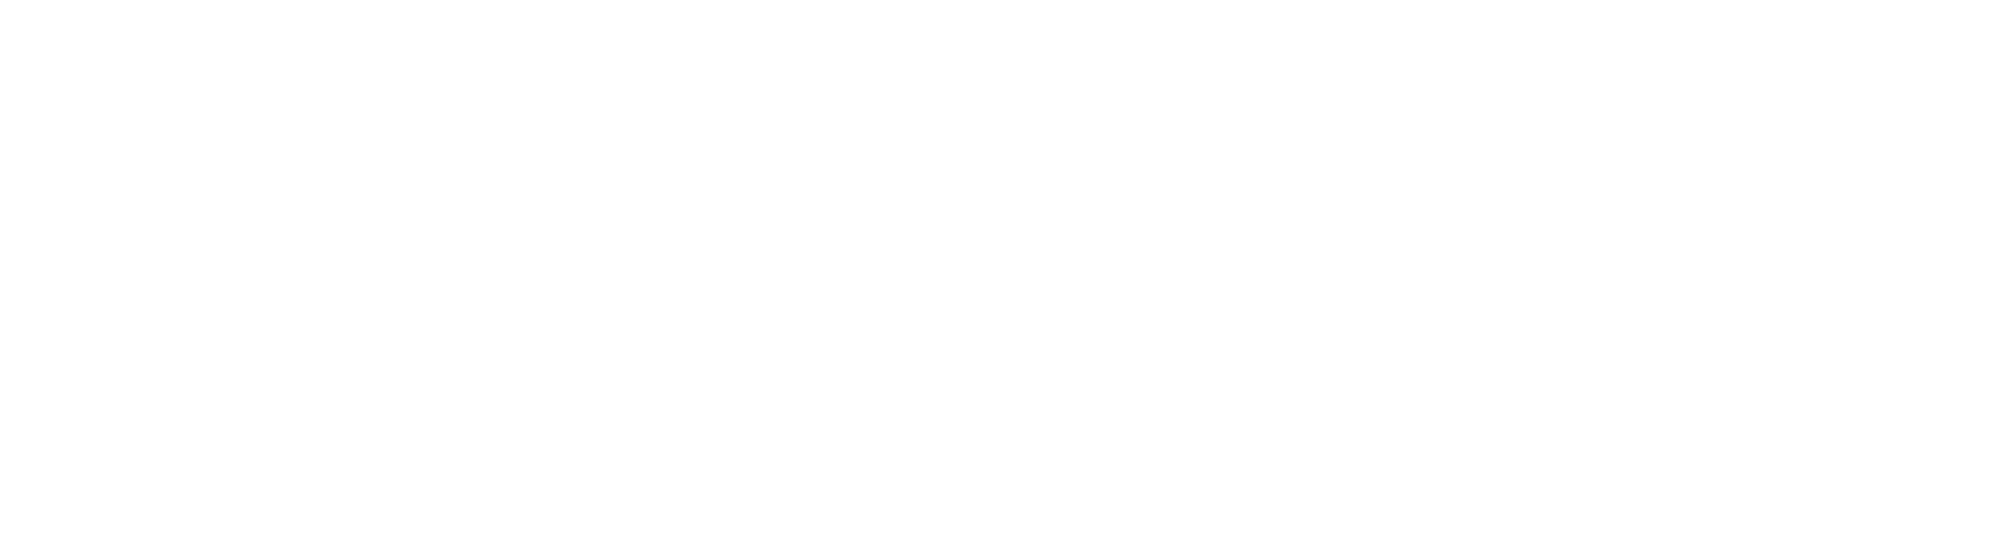 povo2.0 eSIM「超」入門ガイド